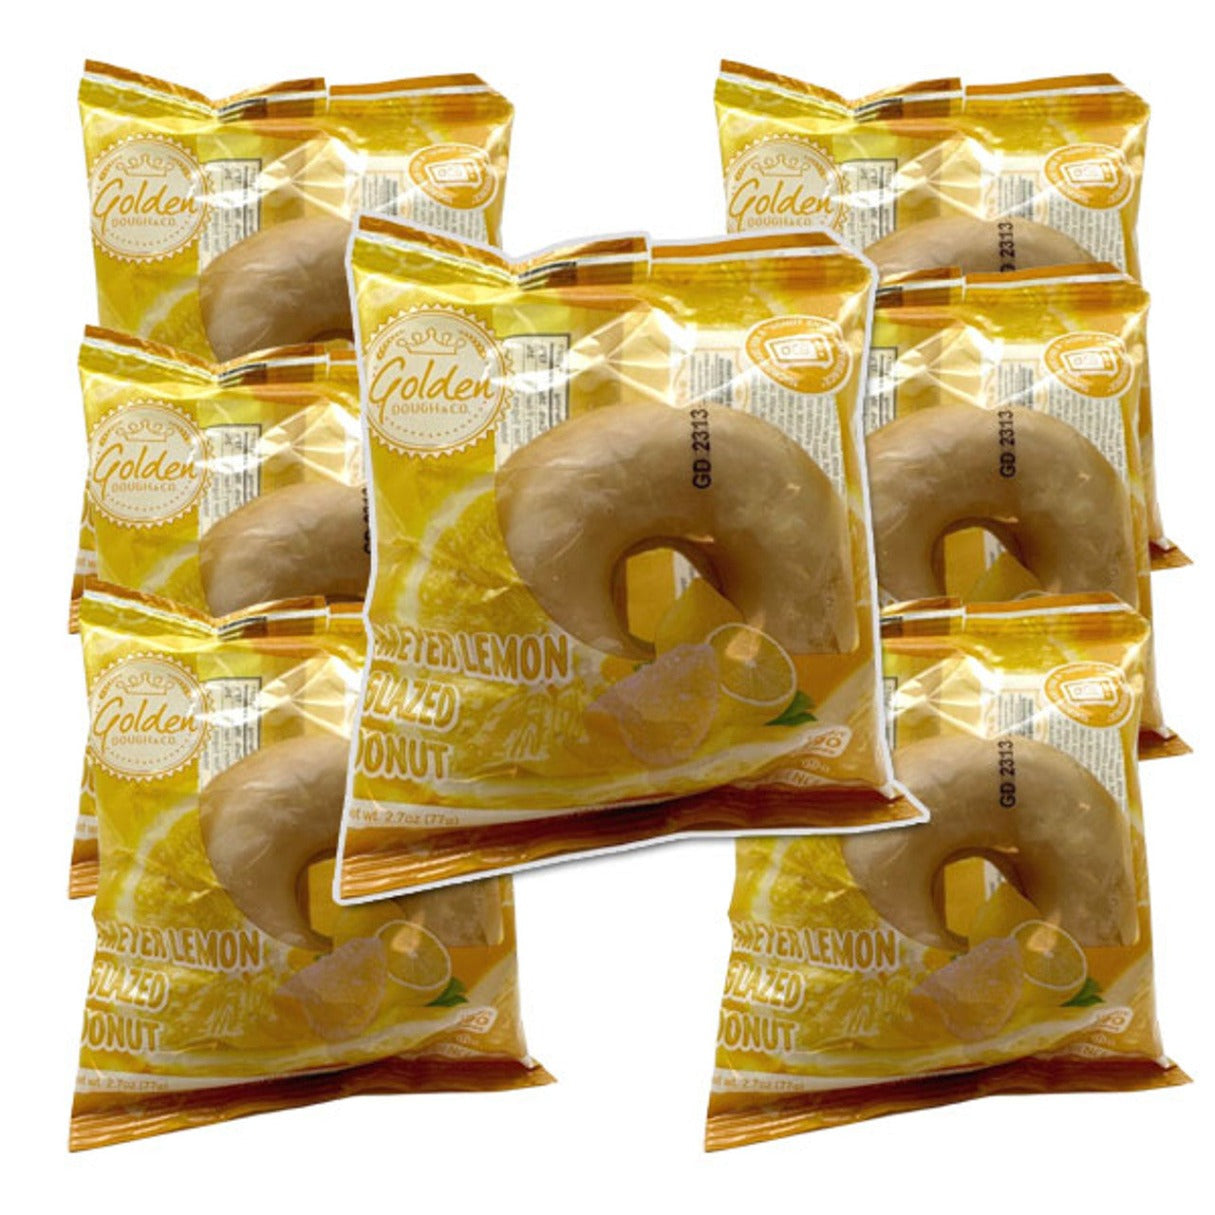 Golden Lemon Glazed Donuts 2.7oz - 7ct